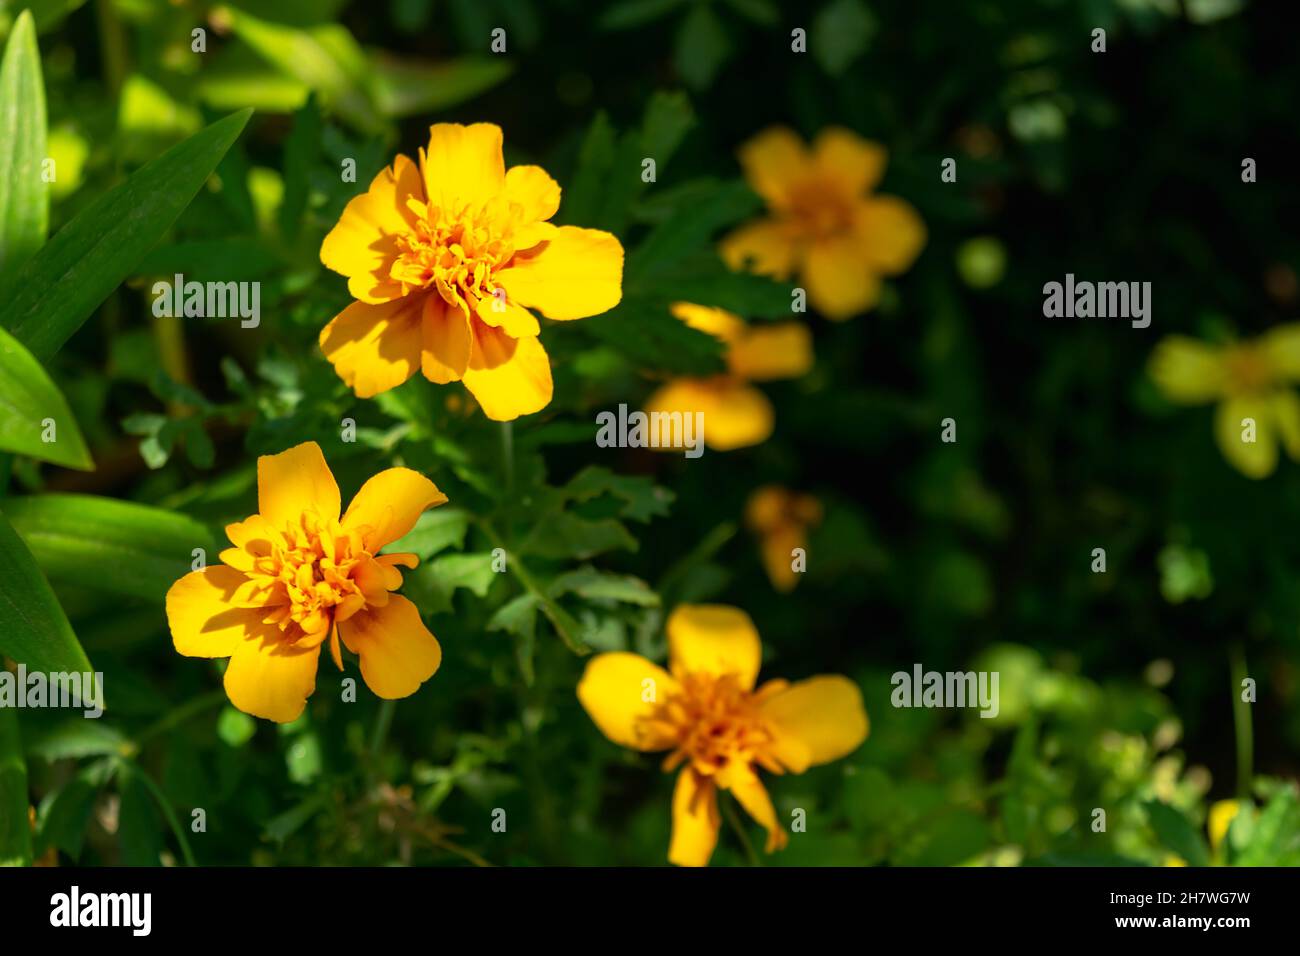 Beautiful yellow flower bed flowers marigolds. Natural flower background. Tagetes. Horizontal photo. Stock Photo